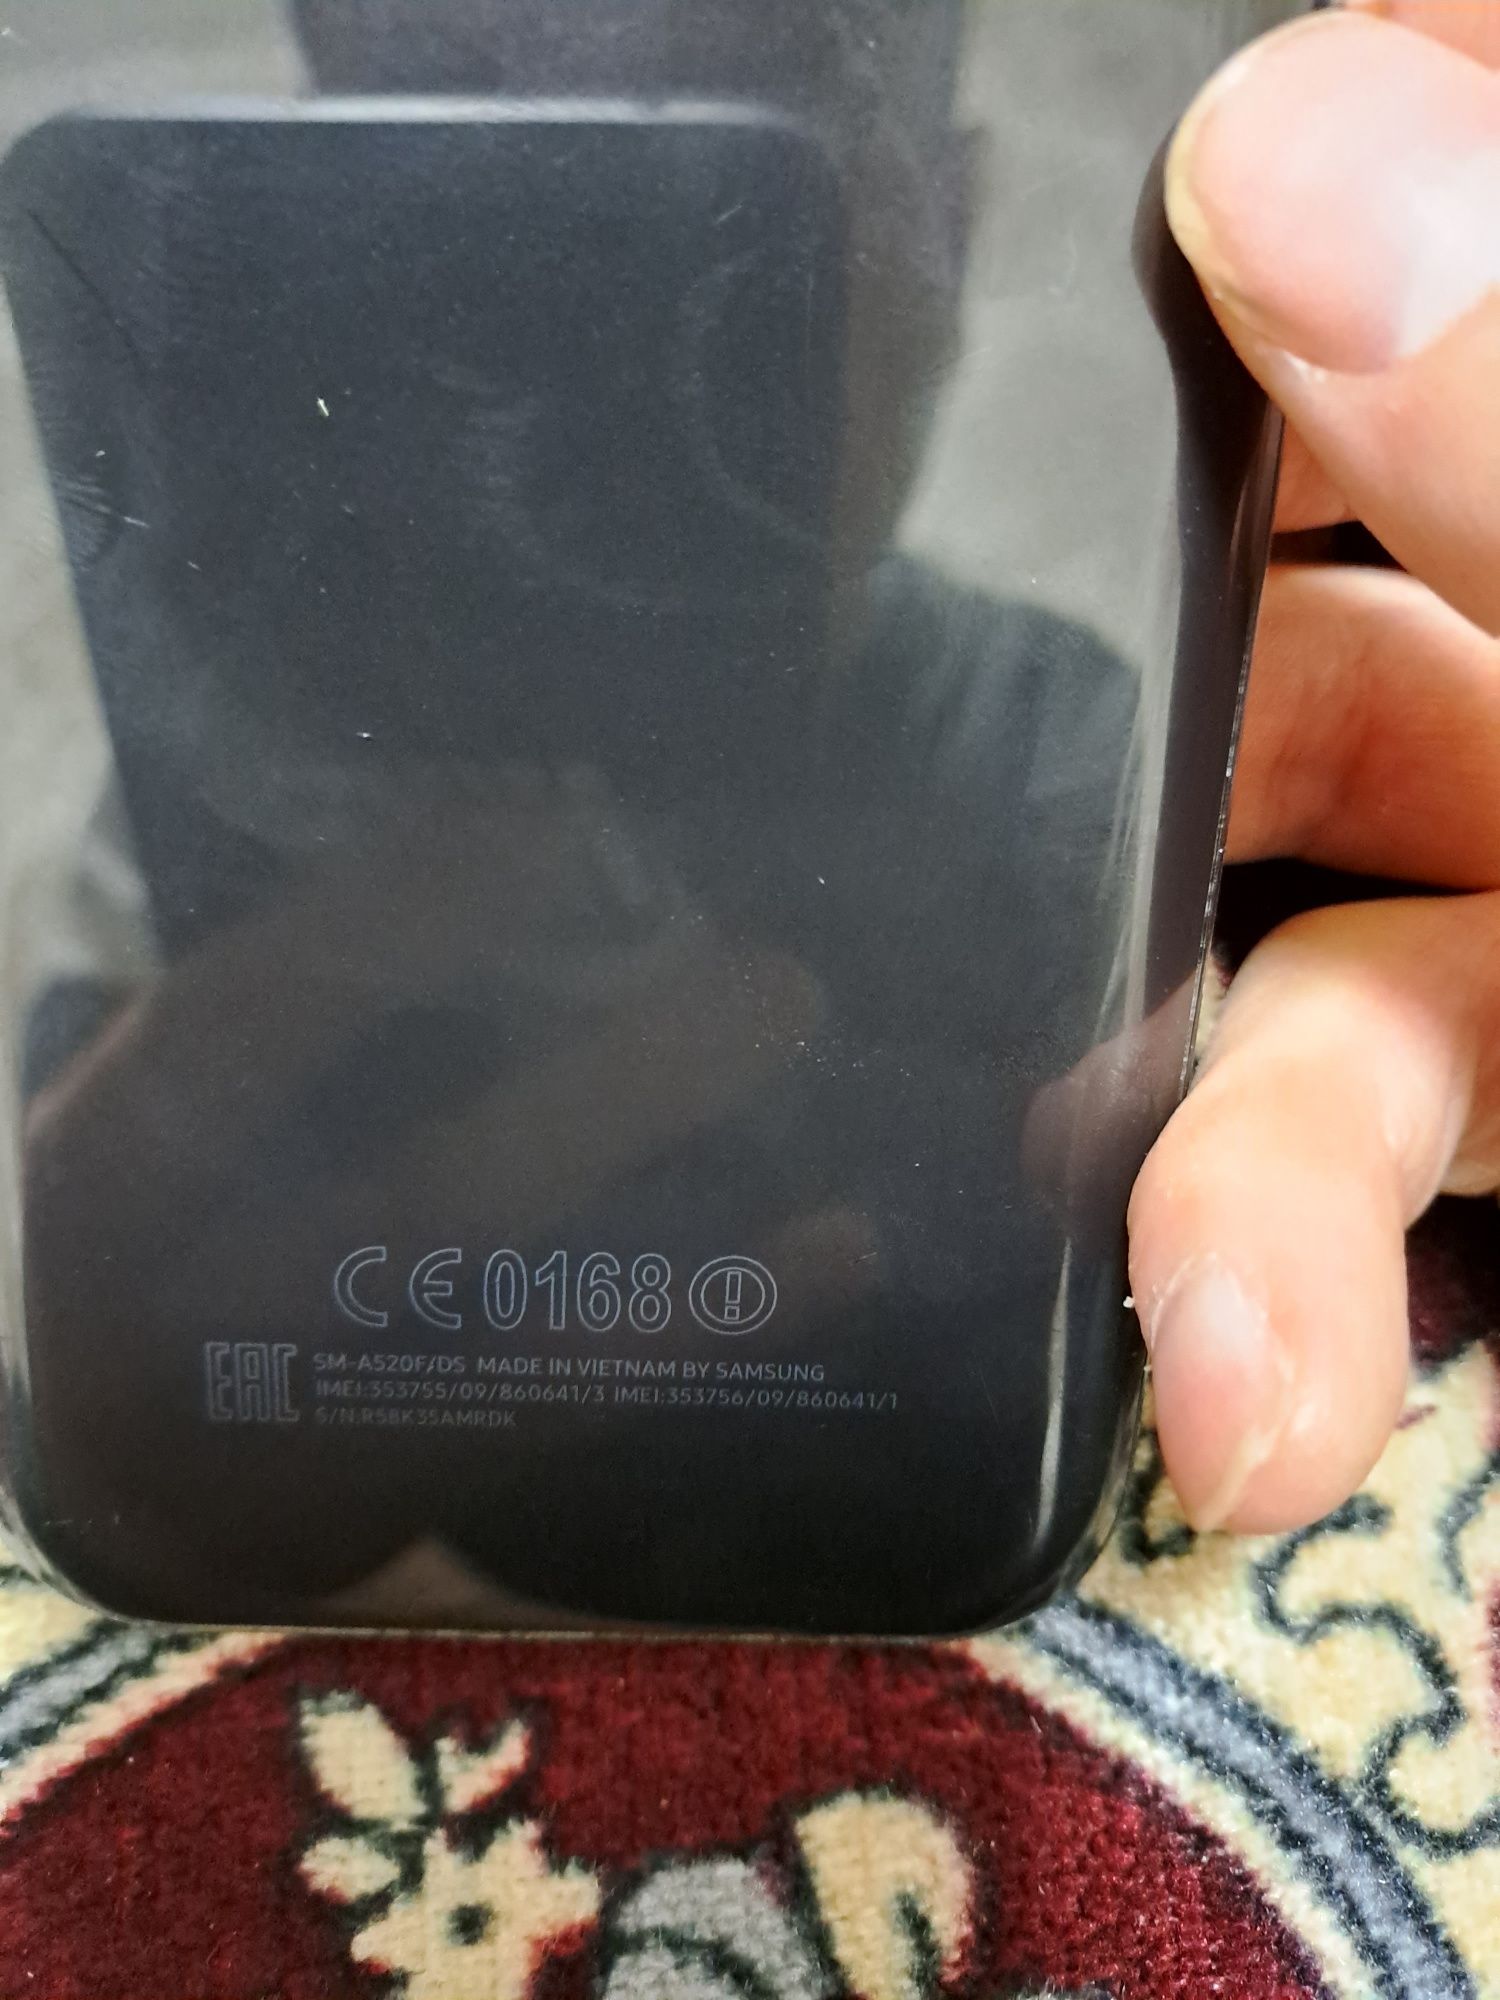 Samsung A5 aybi ekrani ketgan